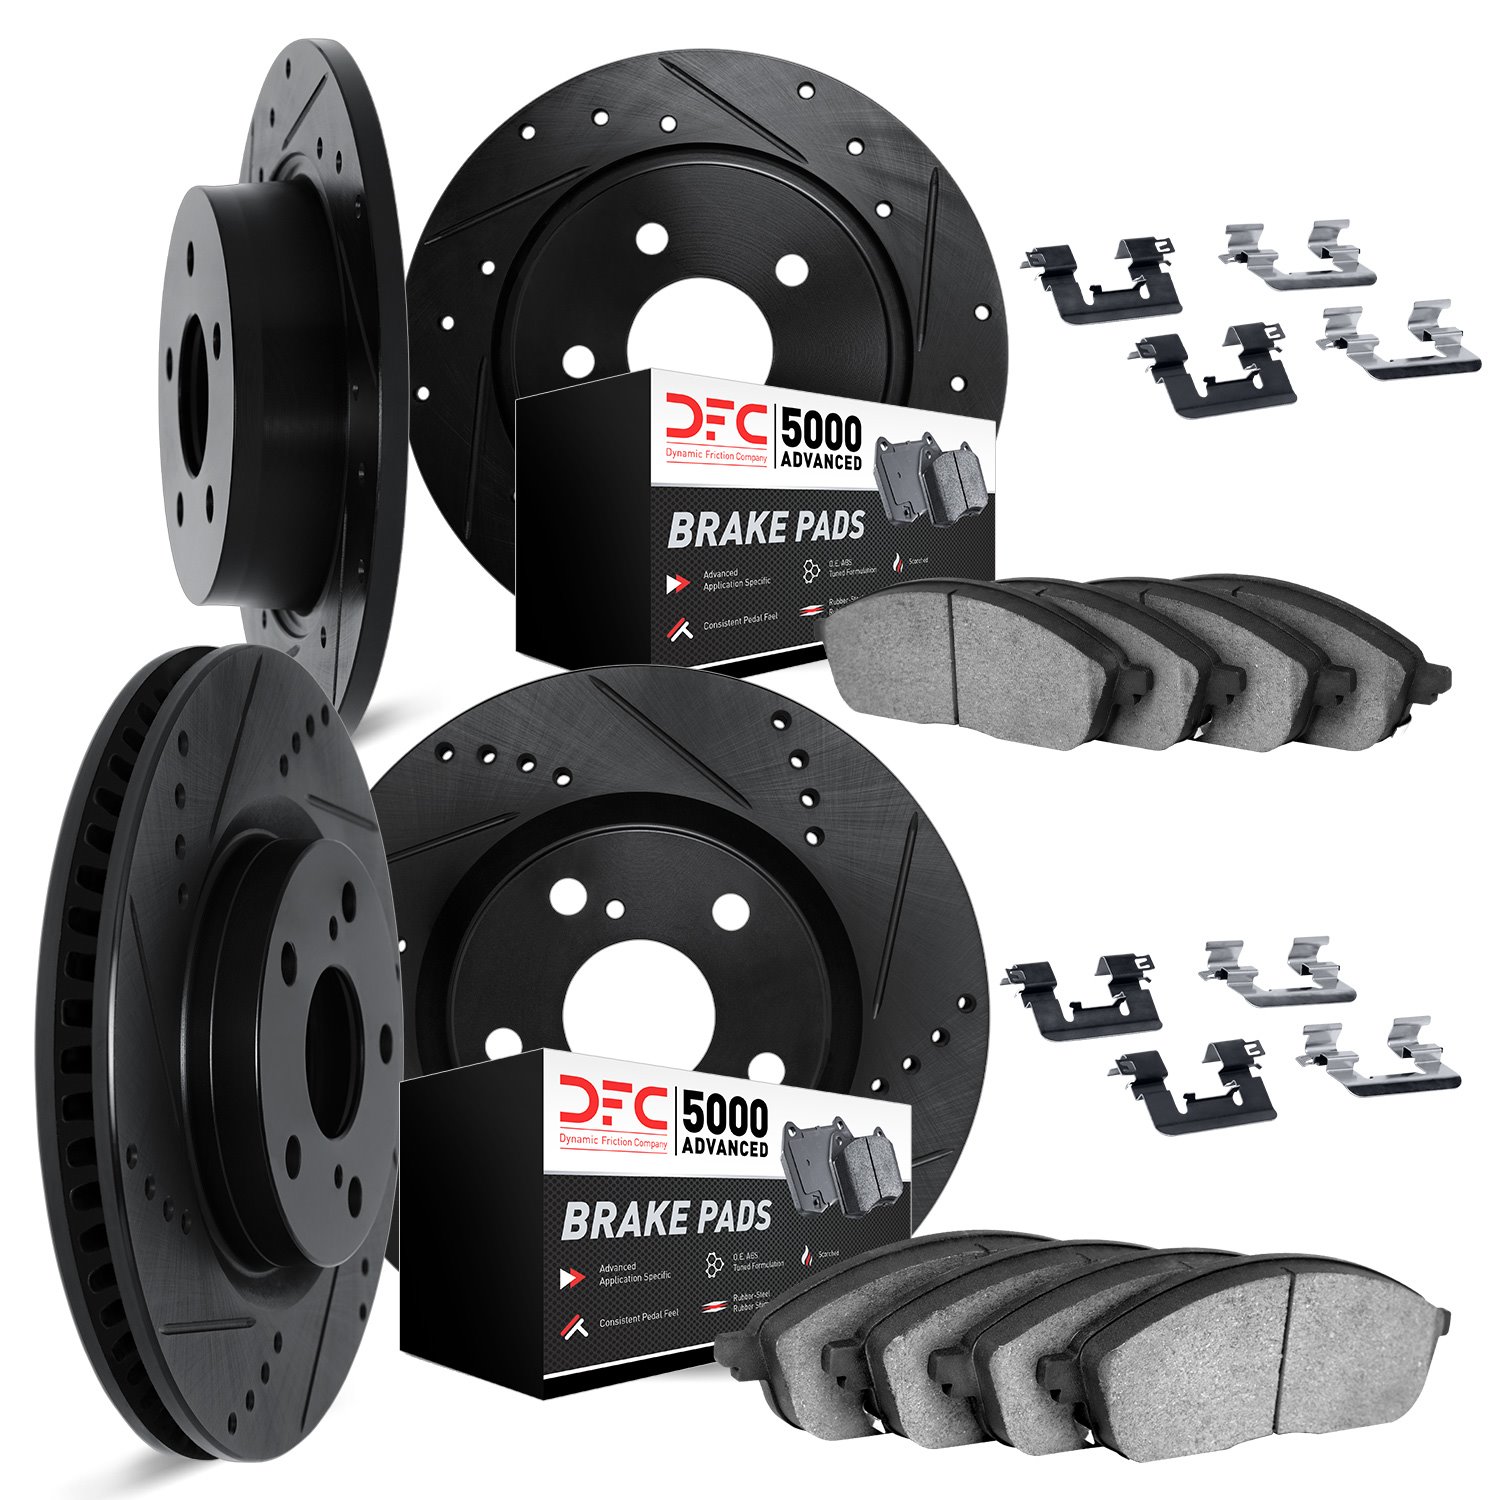 8514-03052 Drilled/Slotted Brake Rotors w/5000 Advanced Brake Pads Kit & Hardware [Black], Fits Select Kia/Hyundai/Genesis, Posi